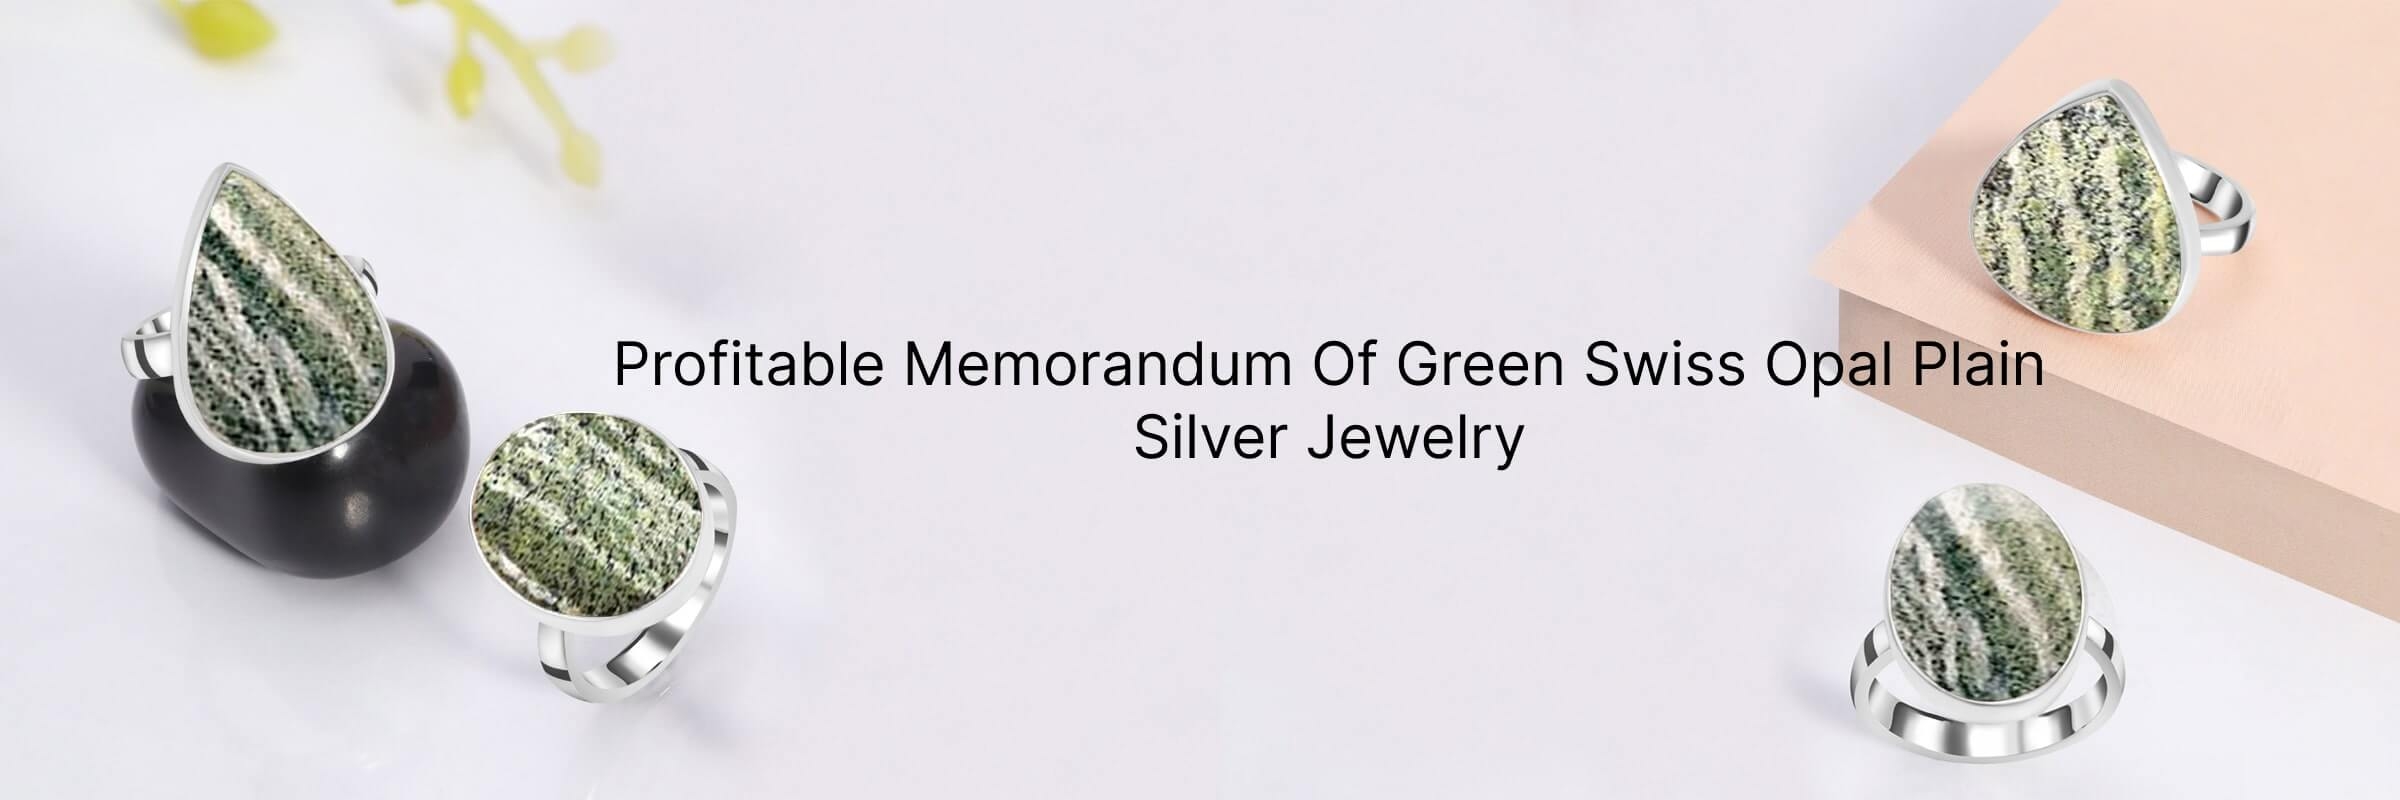 Meaning of Green Swiss Opal Plain Silver Jewelry